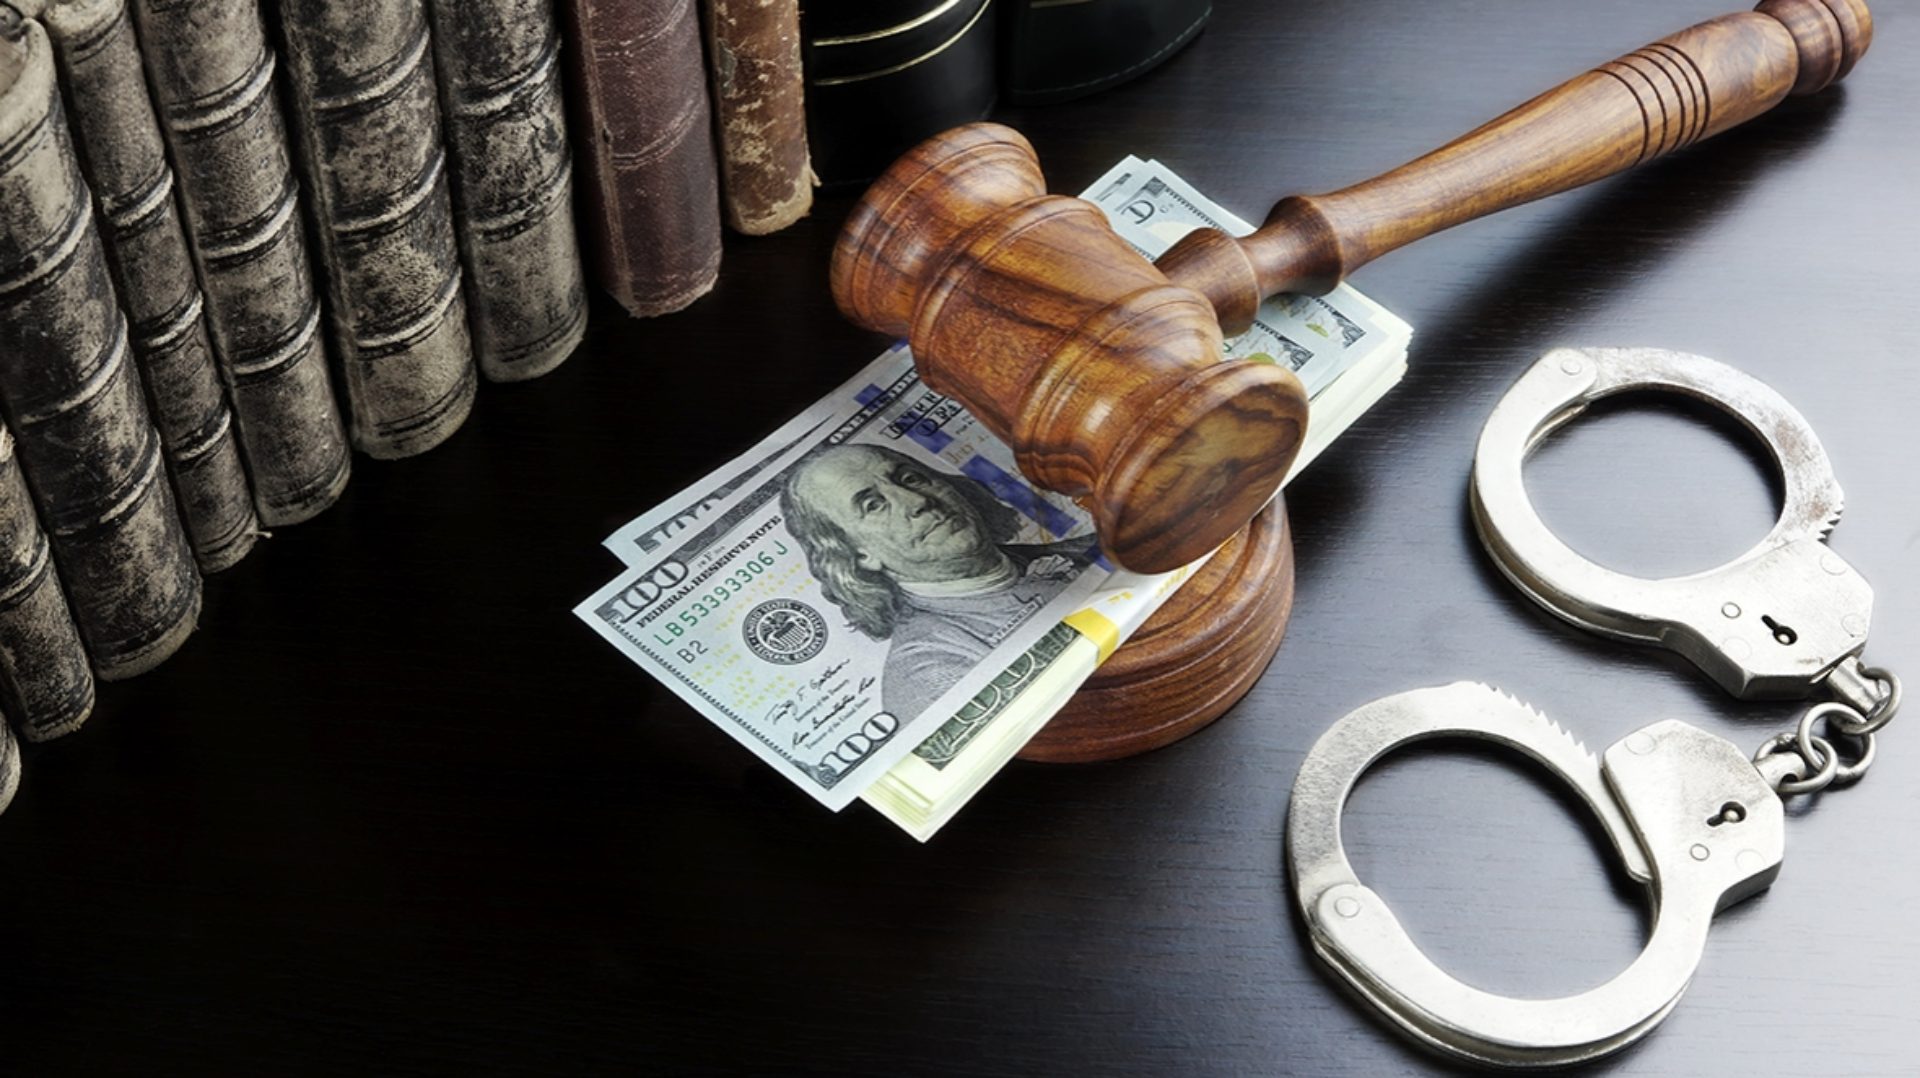 Image of Handcuffs, Gavel and Dollar Bill